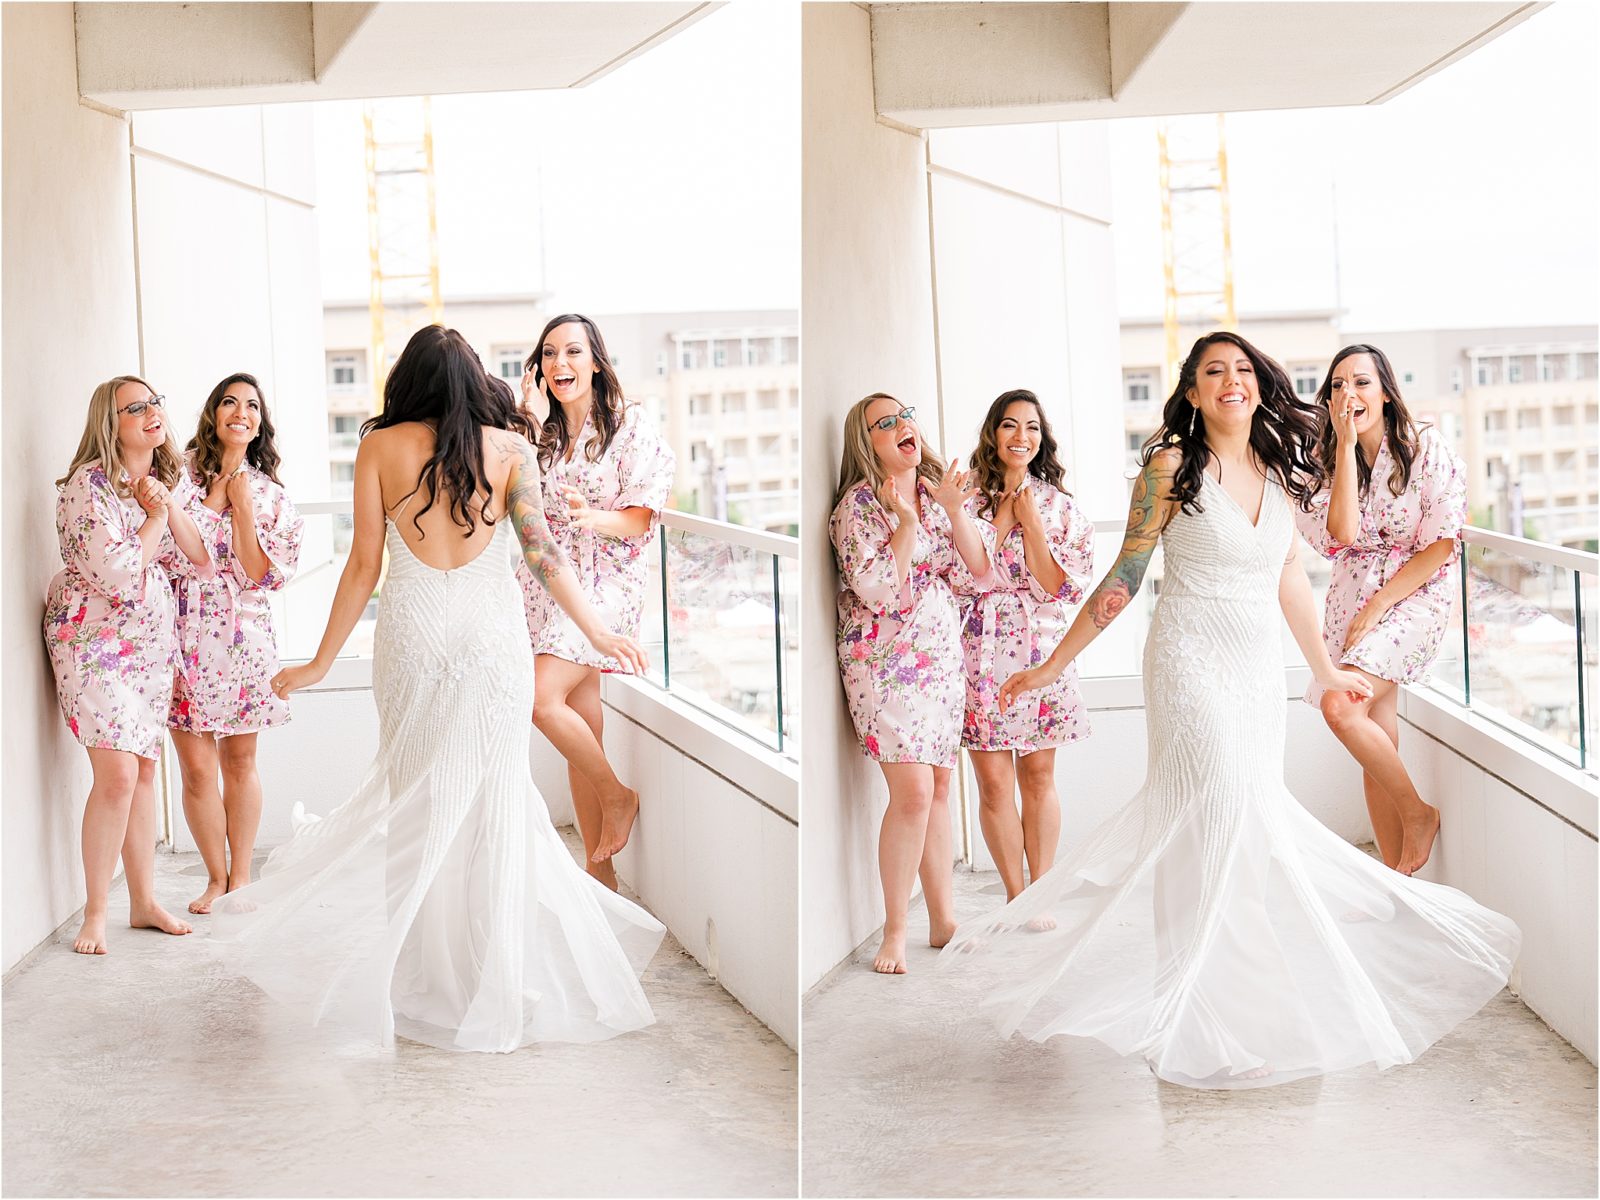 First look with bridesmaids by DFW Wedding Photographer Jillian Hogan 